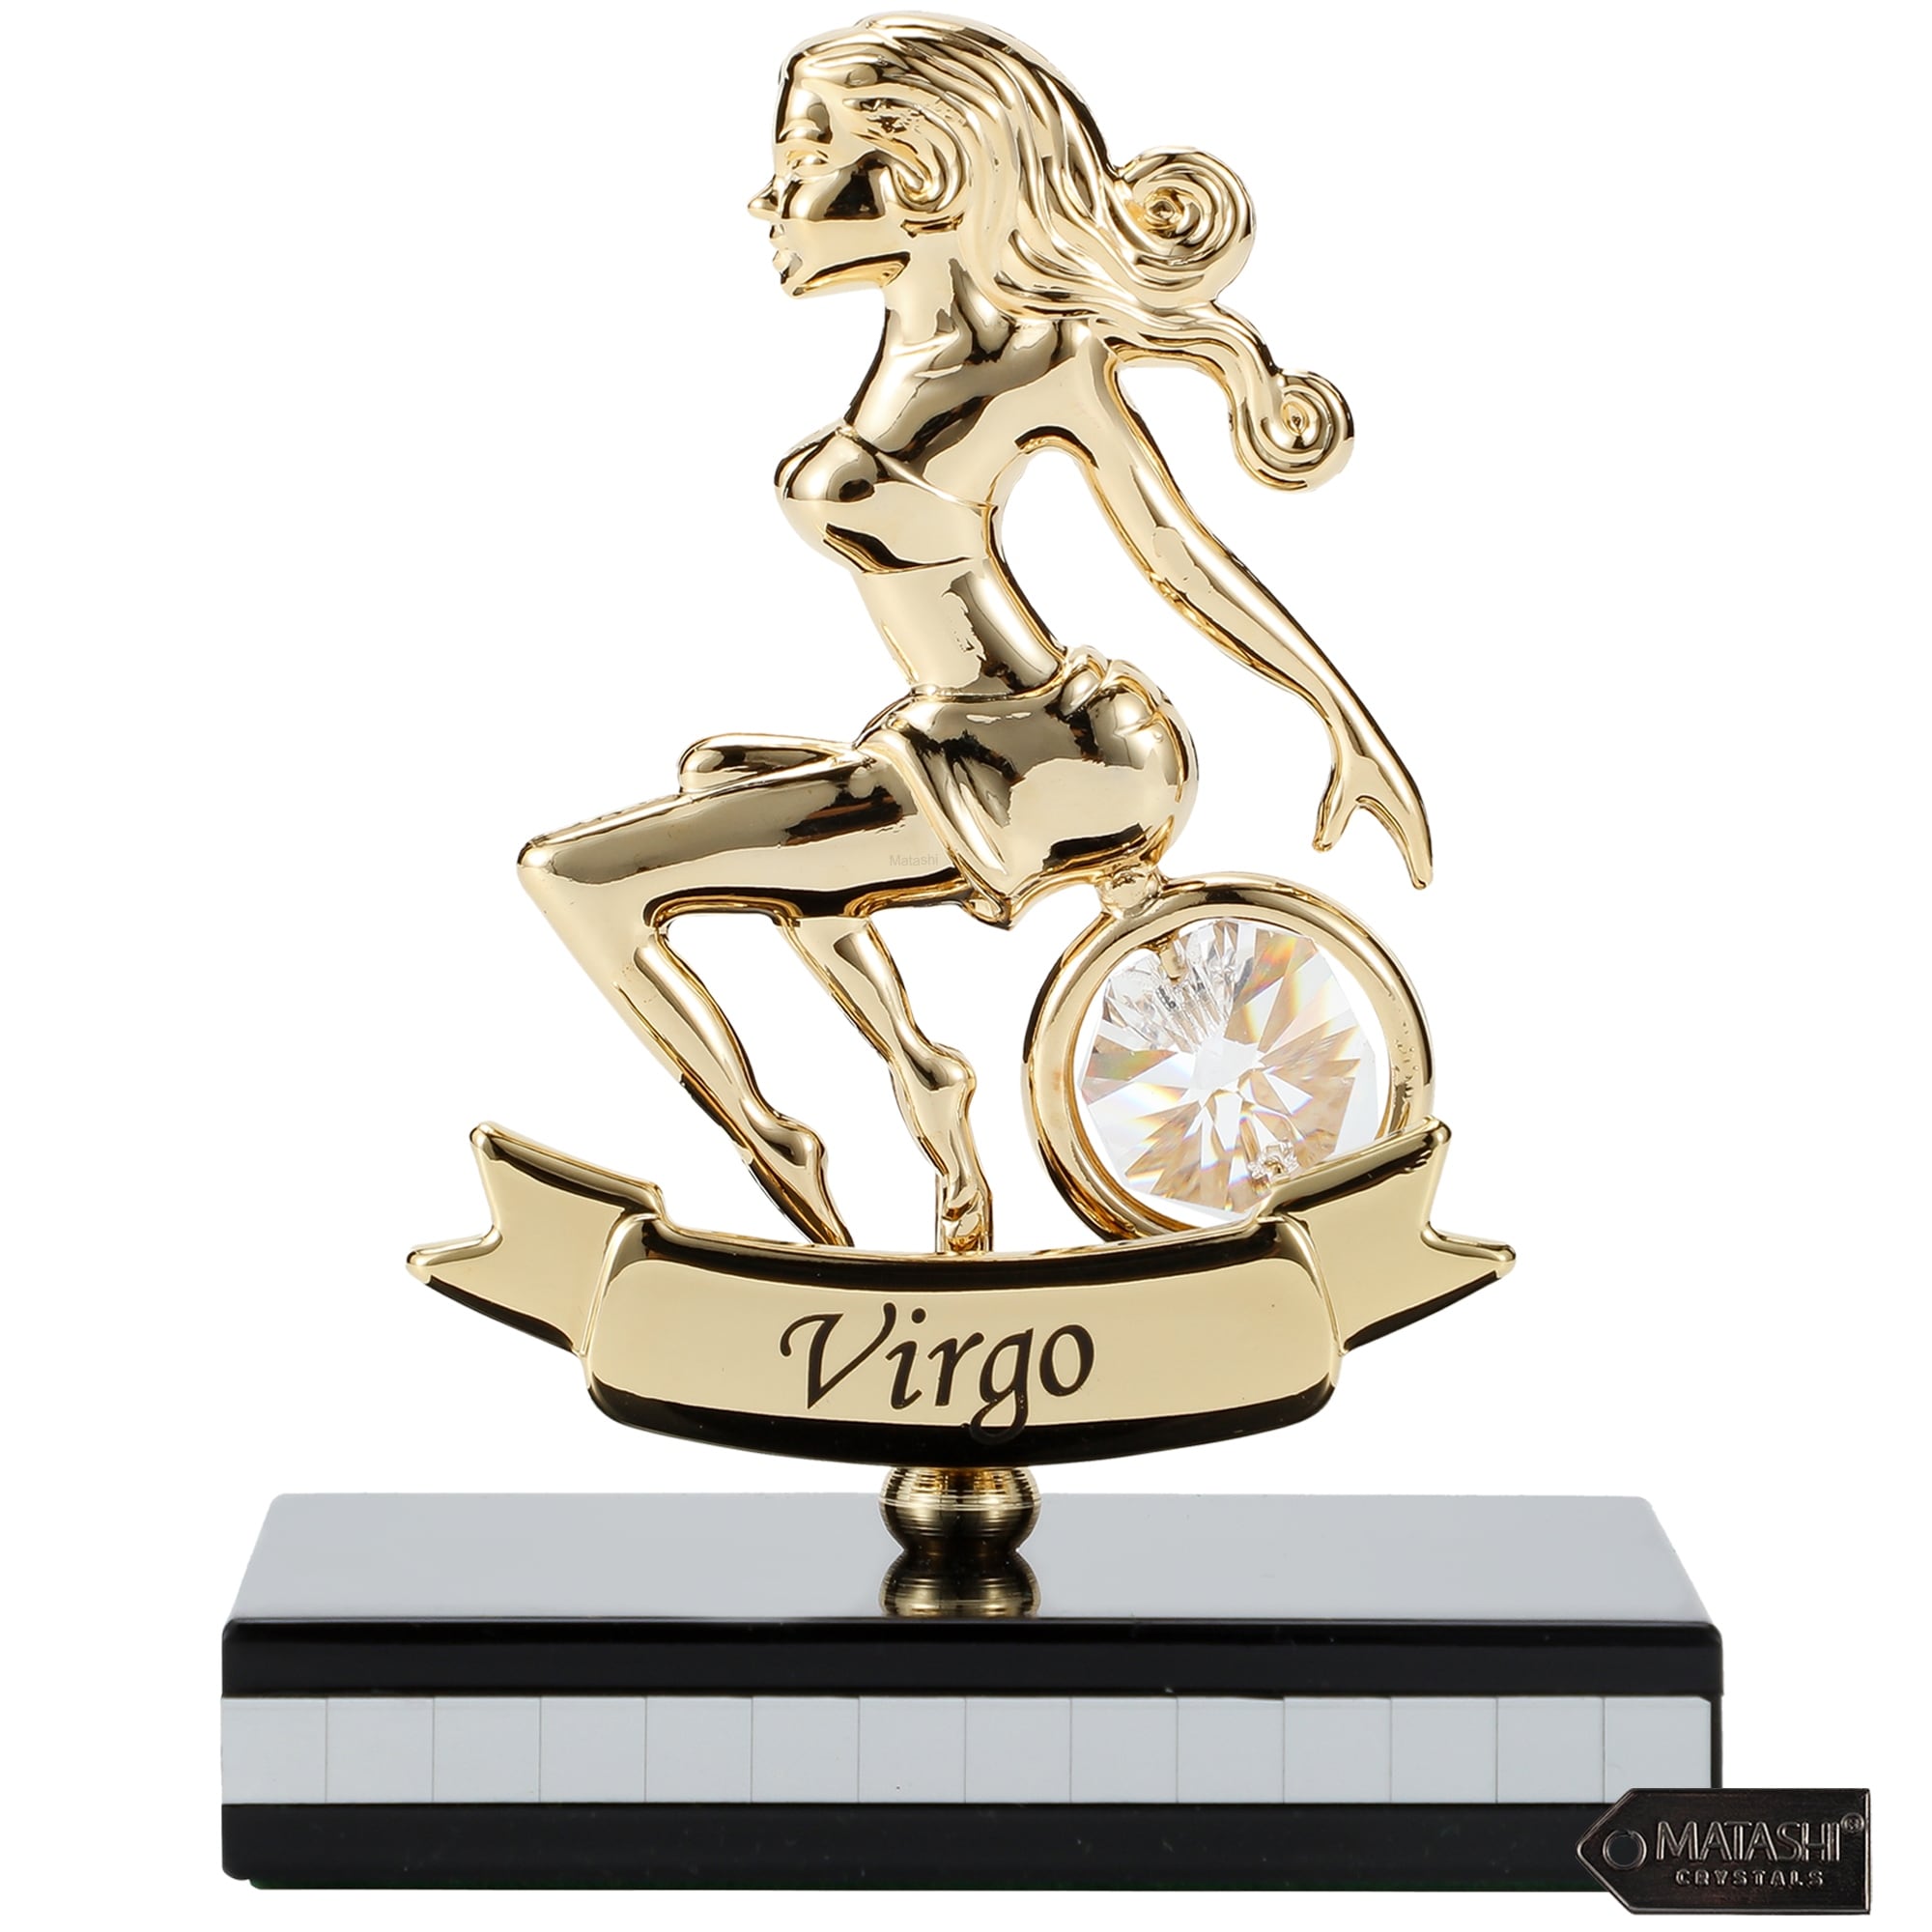 Matashi 24K Gold Plated Zodiac Astrological Sign Virgo Figurine